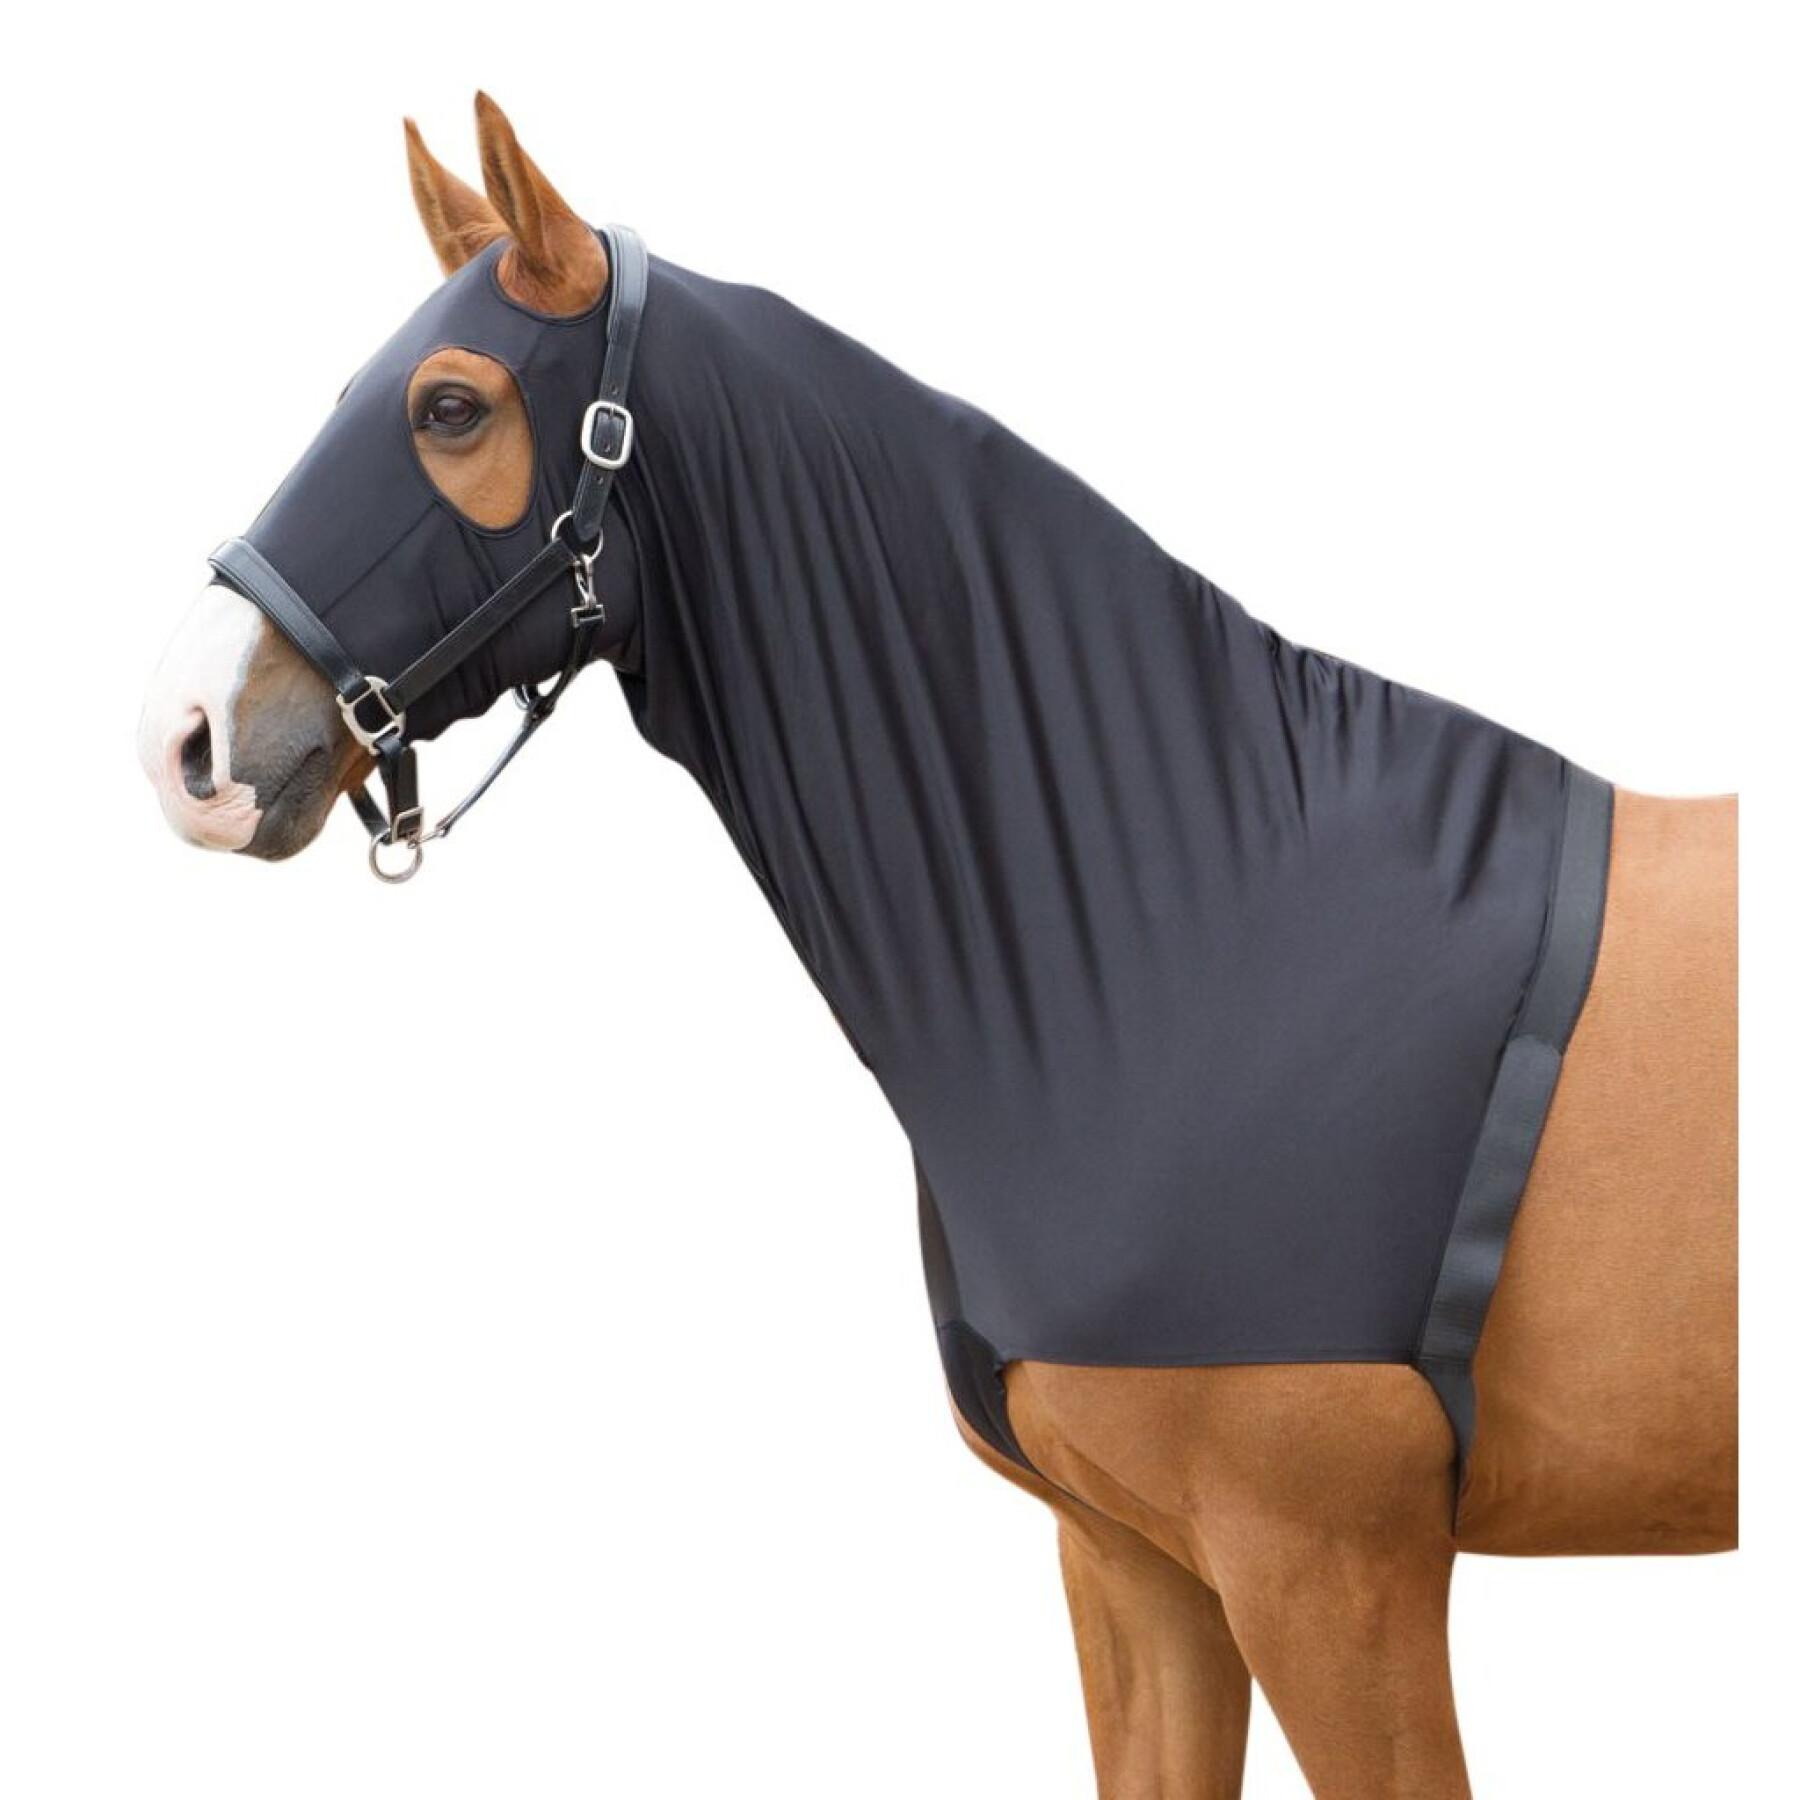 Pferdeschulterschutz mit elastischer Halsabdeckung Harry's Horse